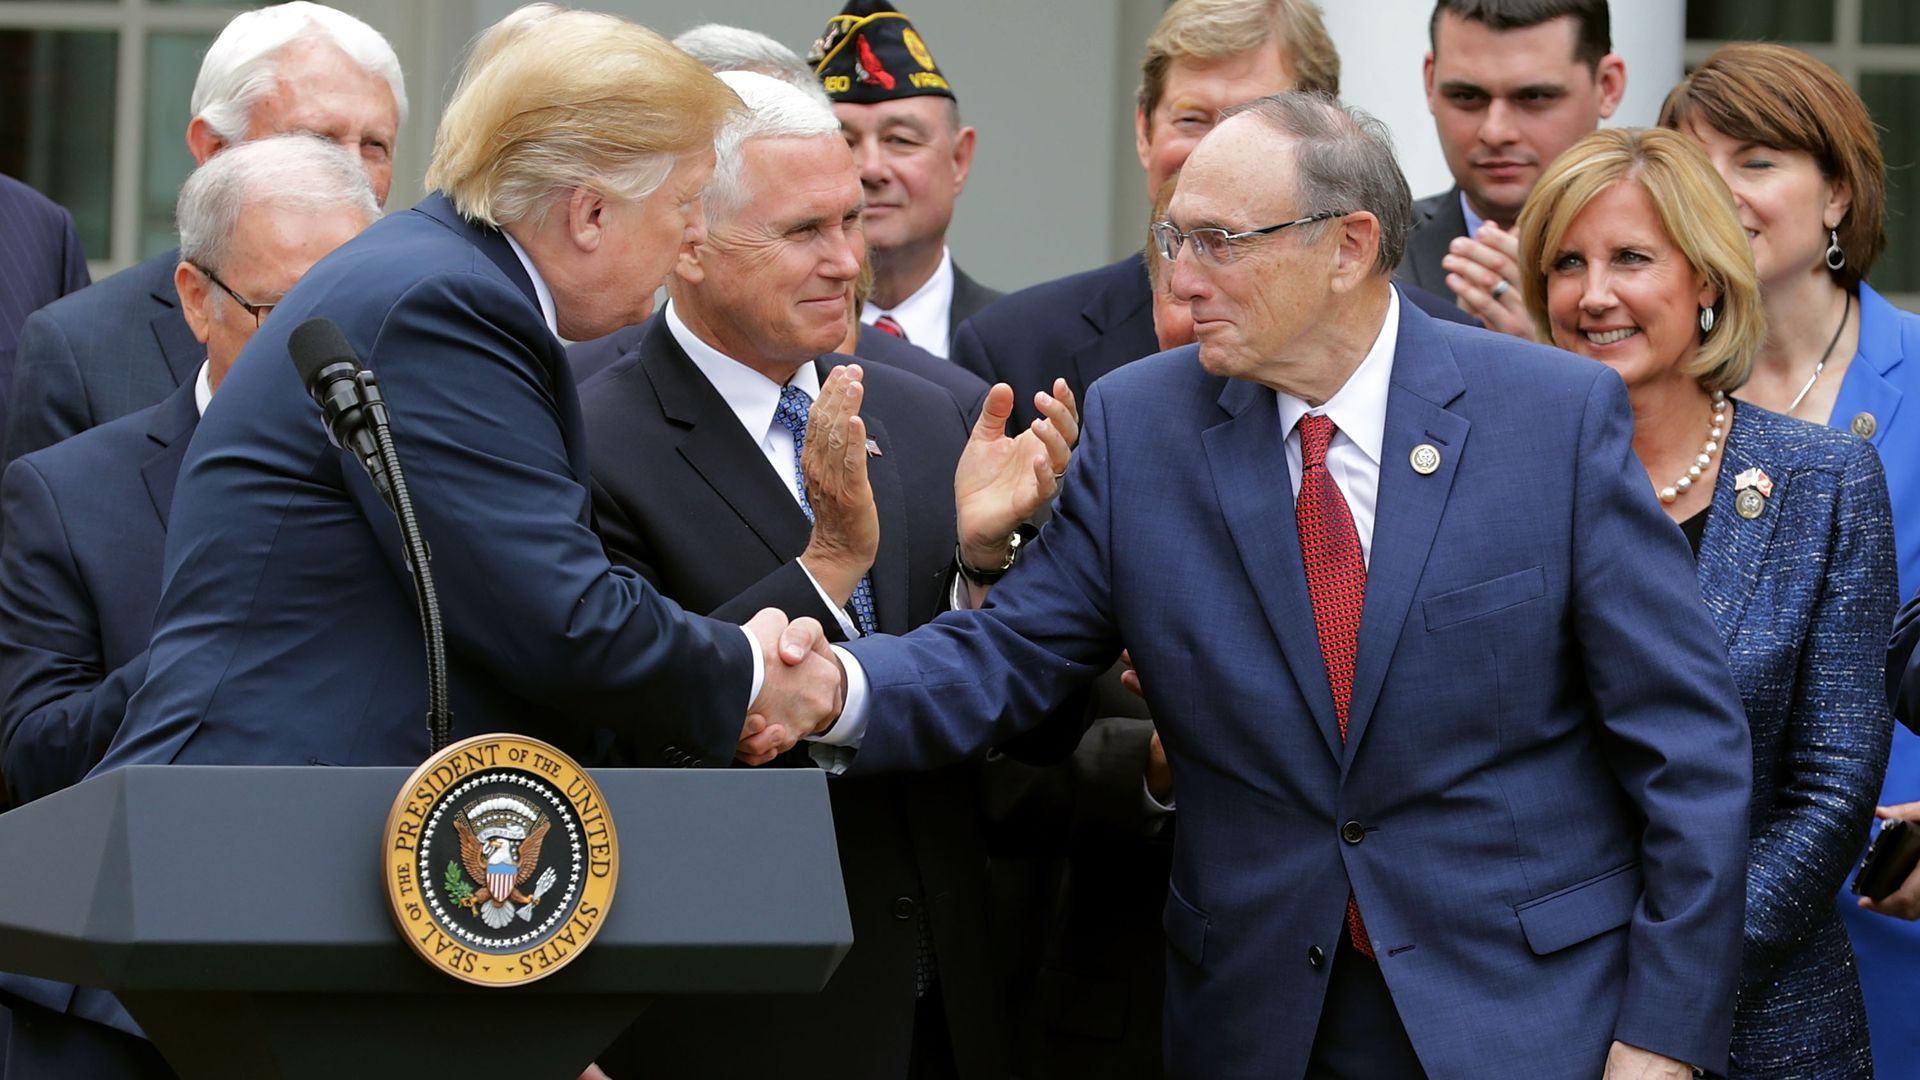 Phil Roe shakes Donald Trump's hand at a podium. 